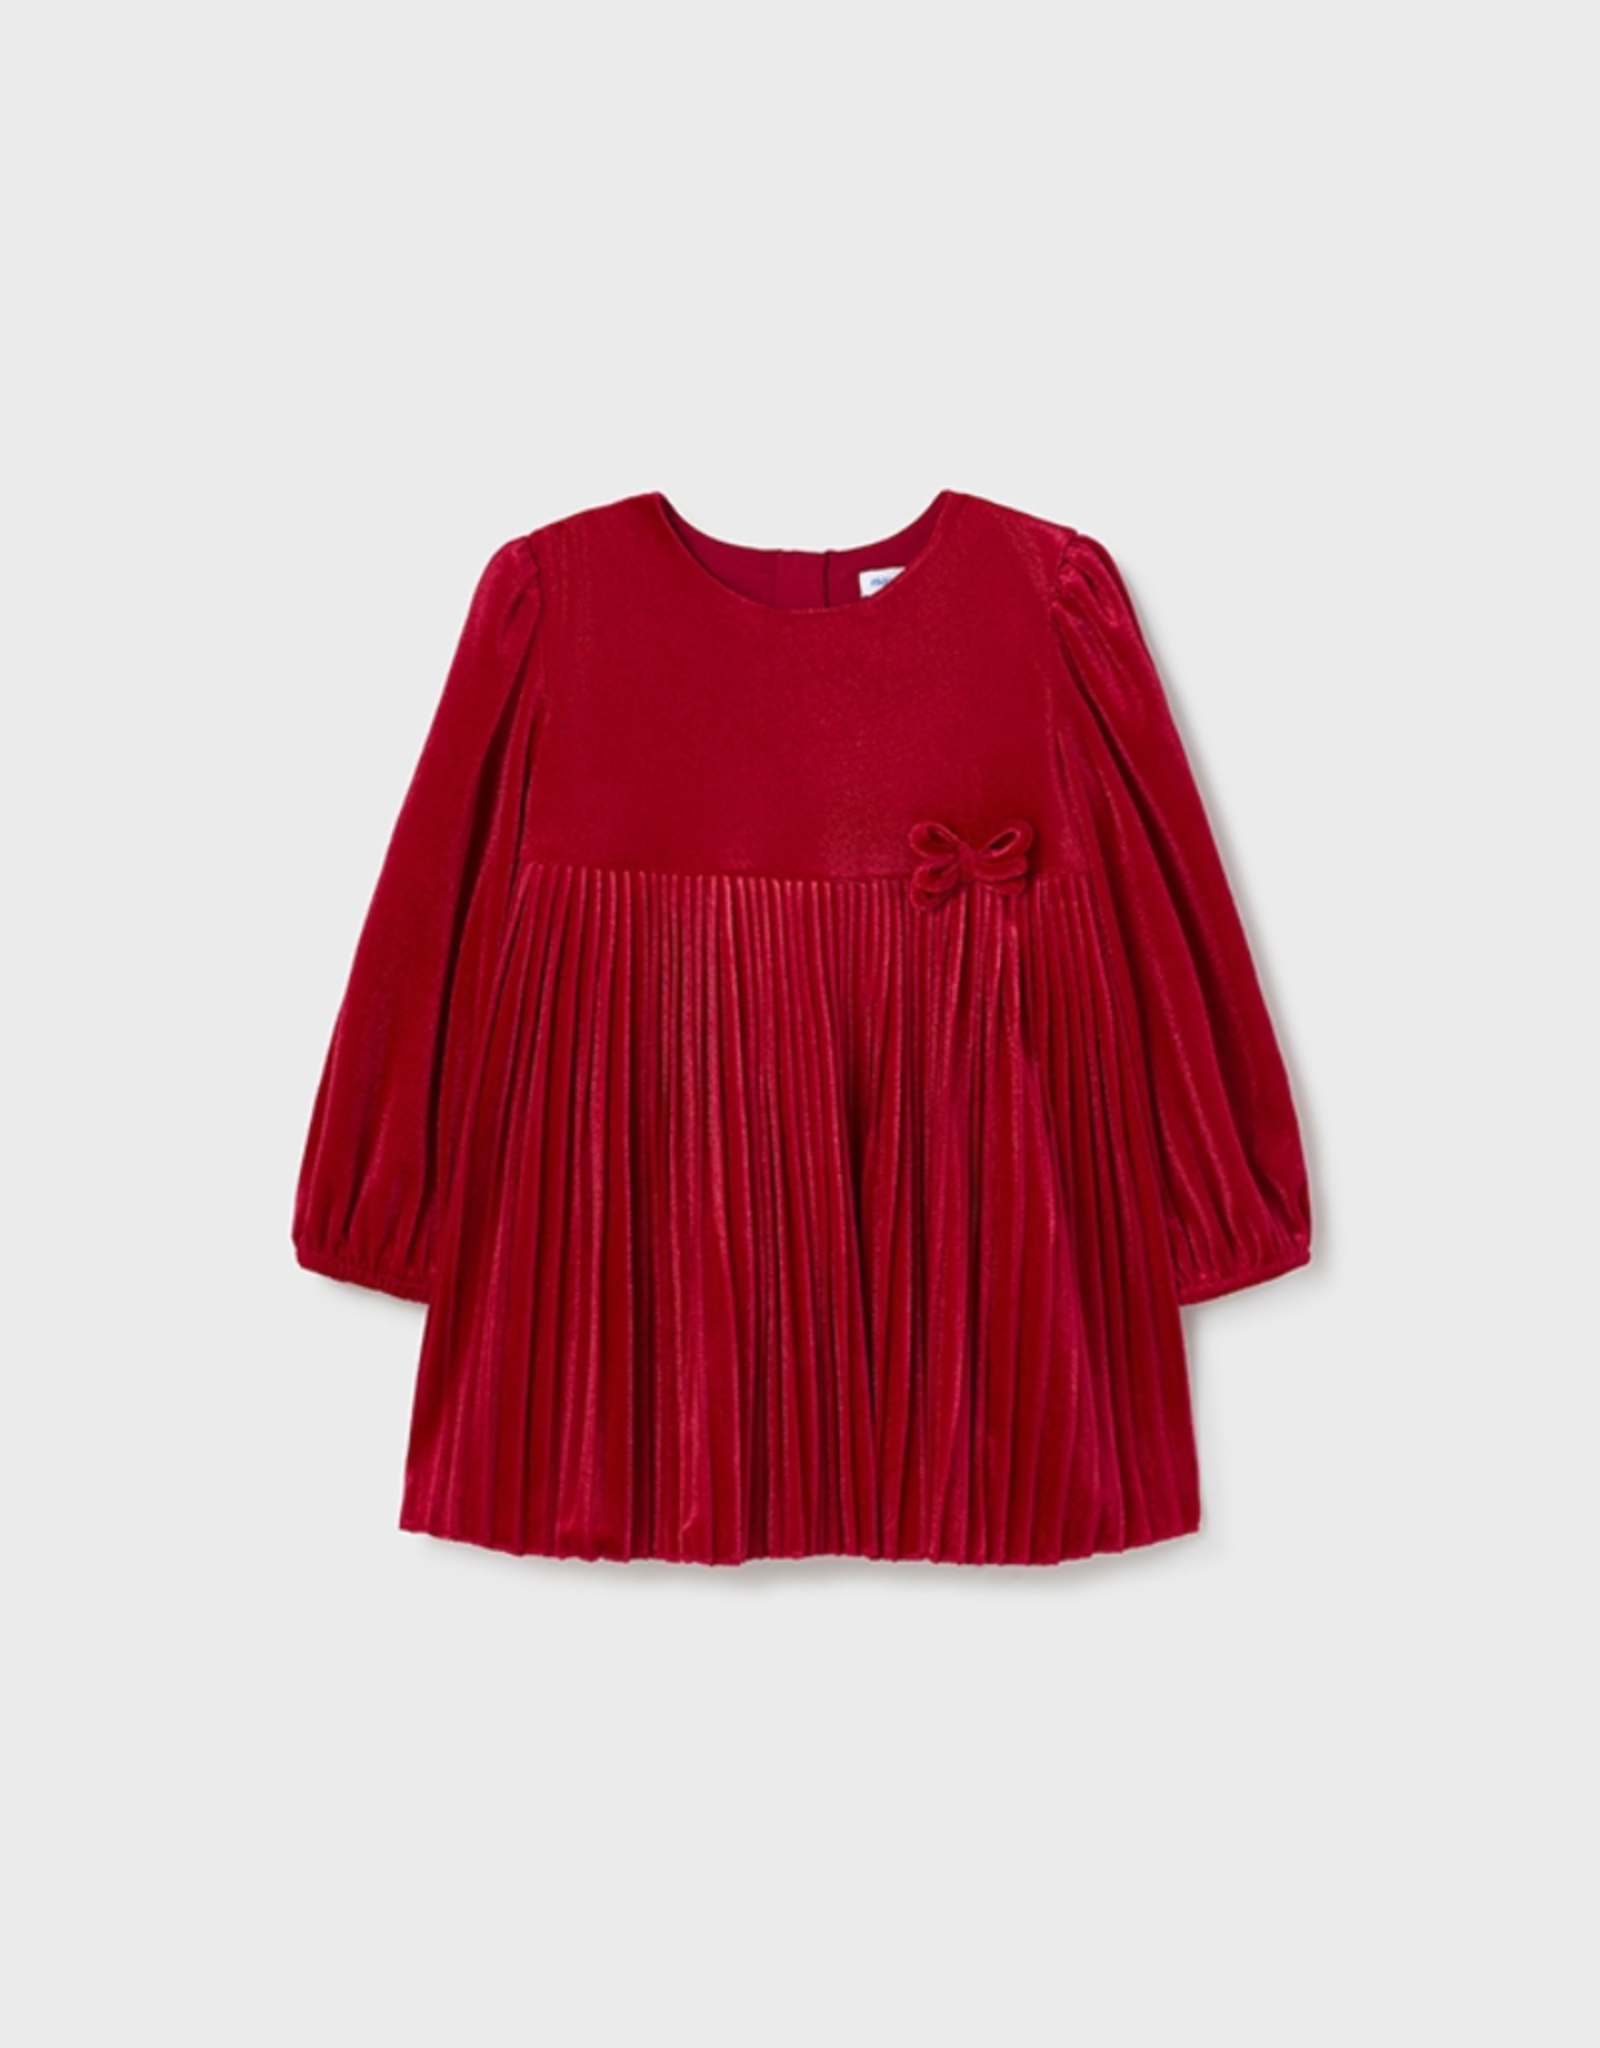 Mayoral Red Velvet Pleat Dress (2949), 24m